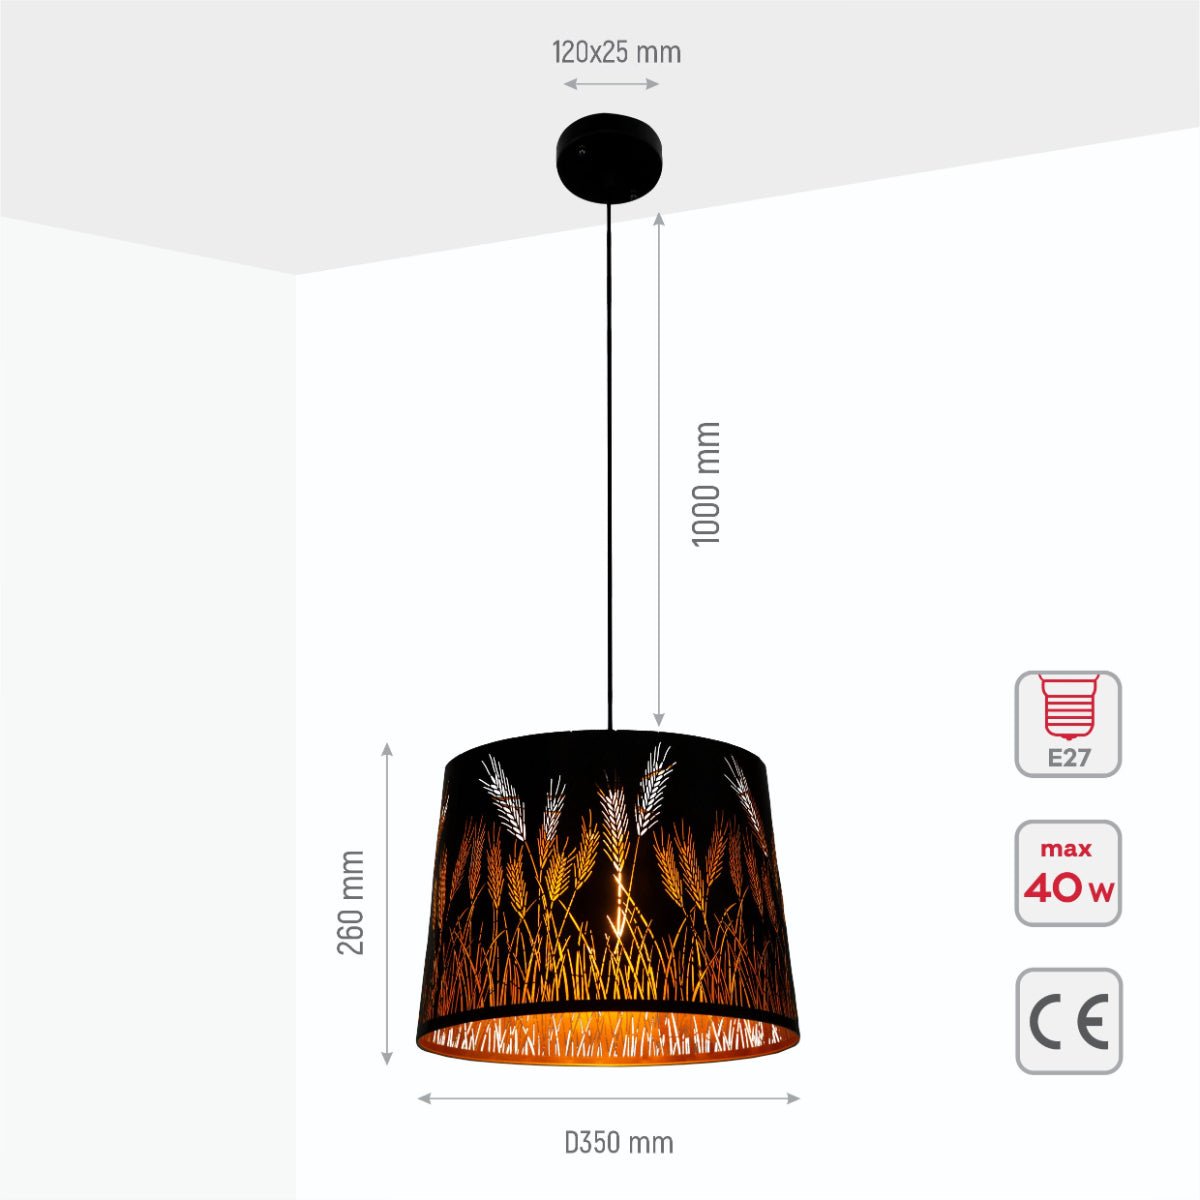 Size and specs of Black-Golden Metal Spike Frustum Pendant Ceiling Light with E27 | TEKLED 150-18084